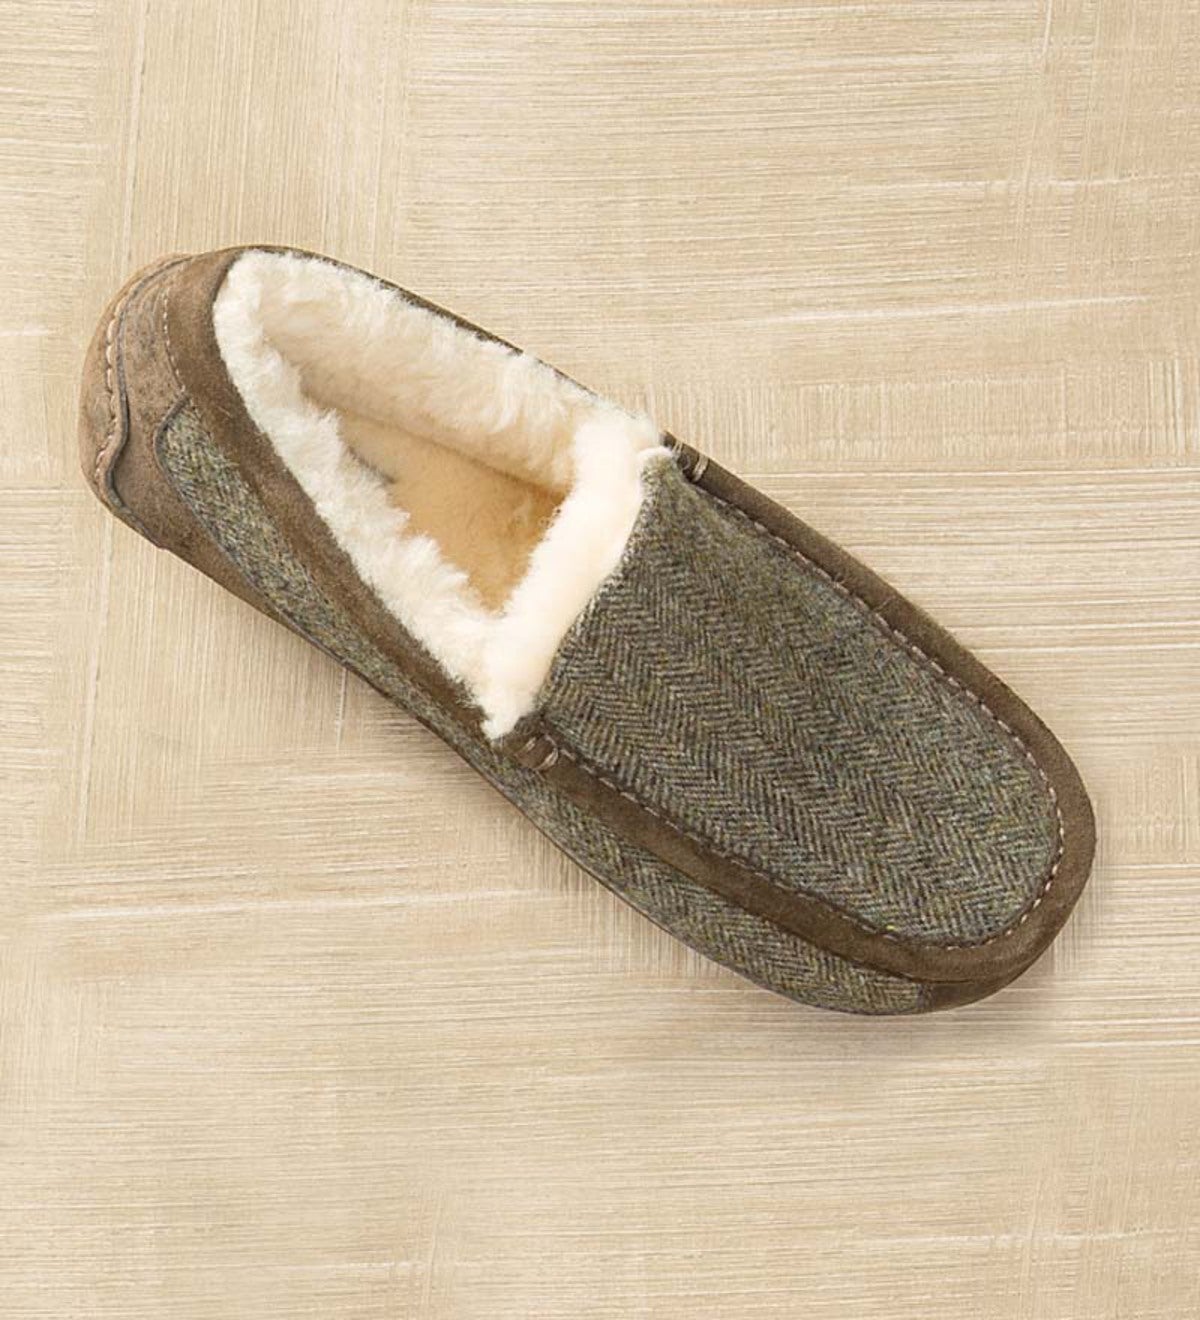 ugg ascot tweed slipper